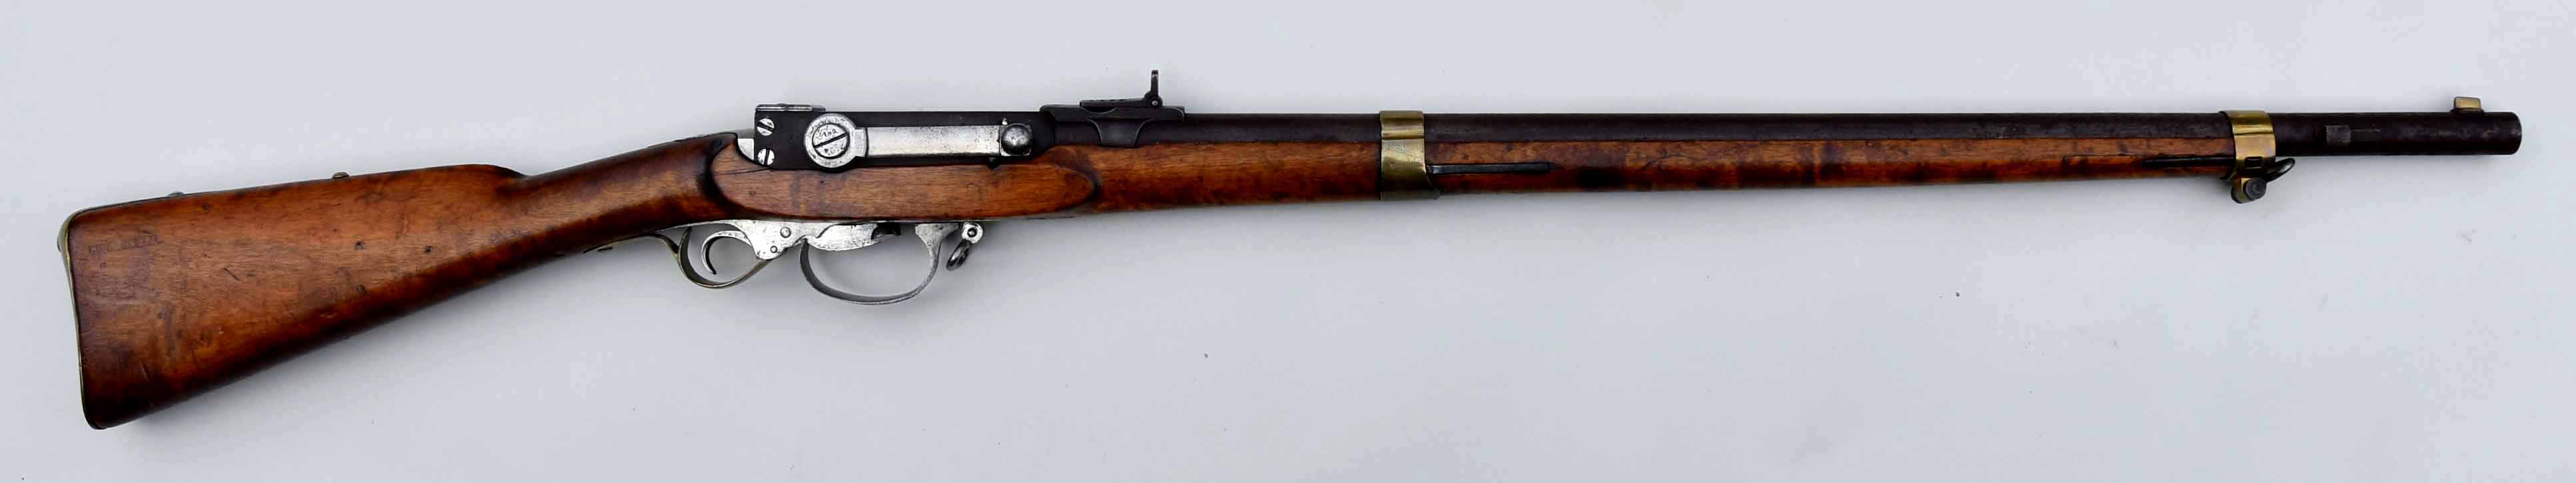 ./guns/rifle/bilder/Rifle-Kongsberg-Kammerlader-M1842-55-59-159-1.jpg